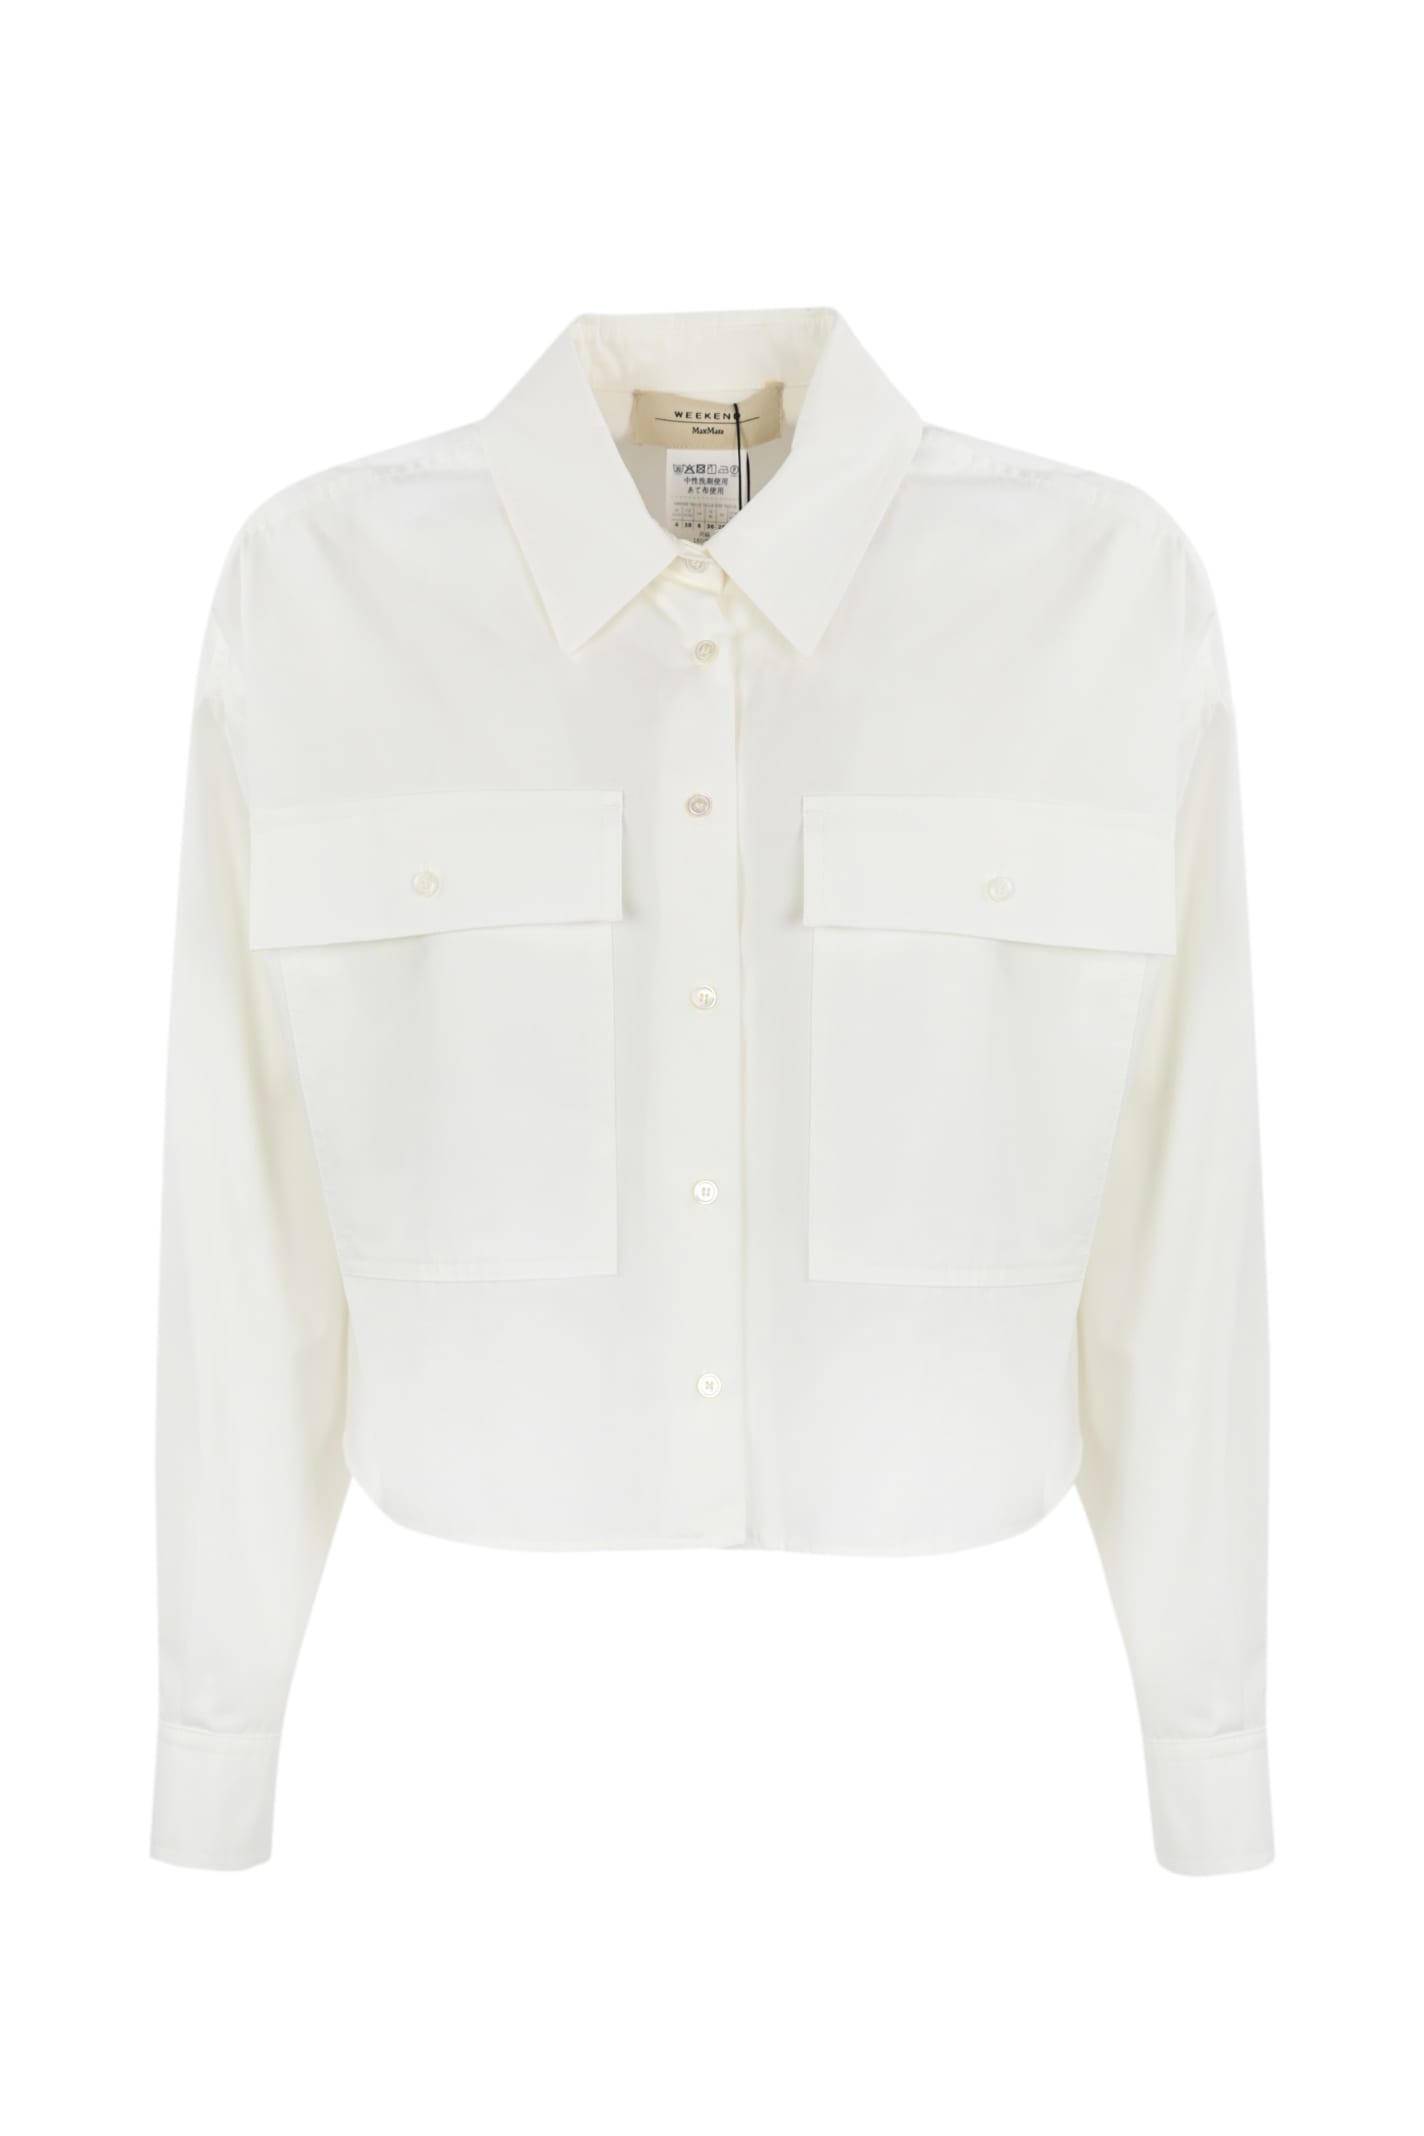 Weekend Max Mara Carter Poplin Crop Shirt In Off White